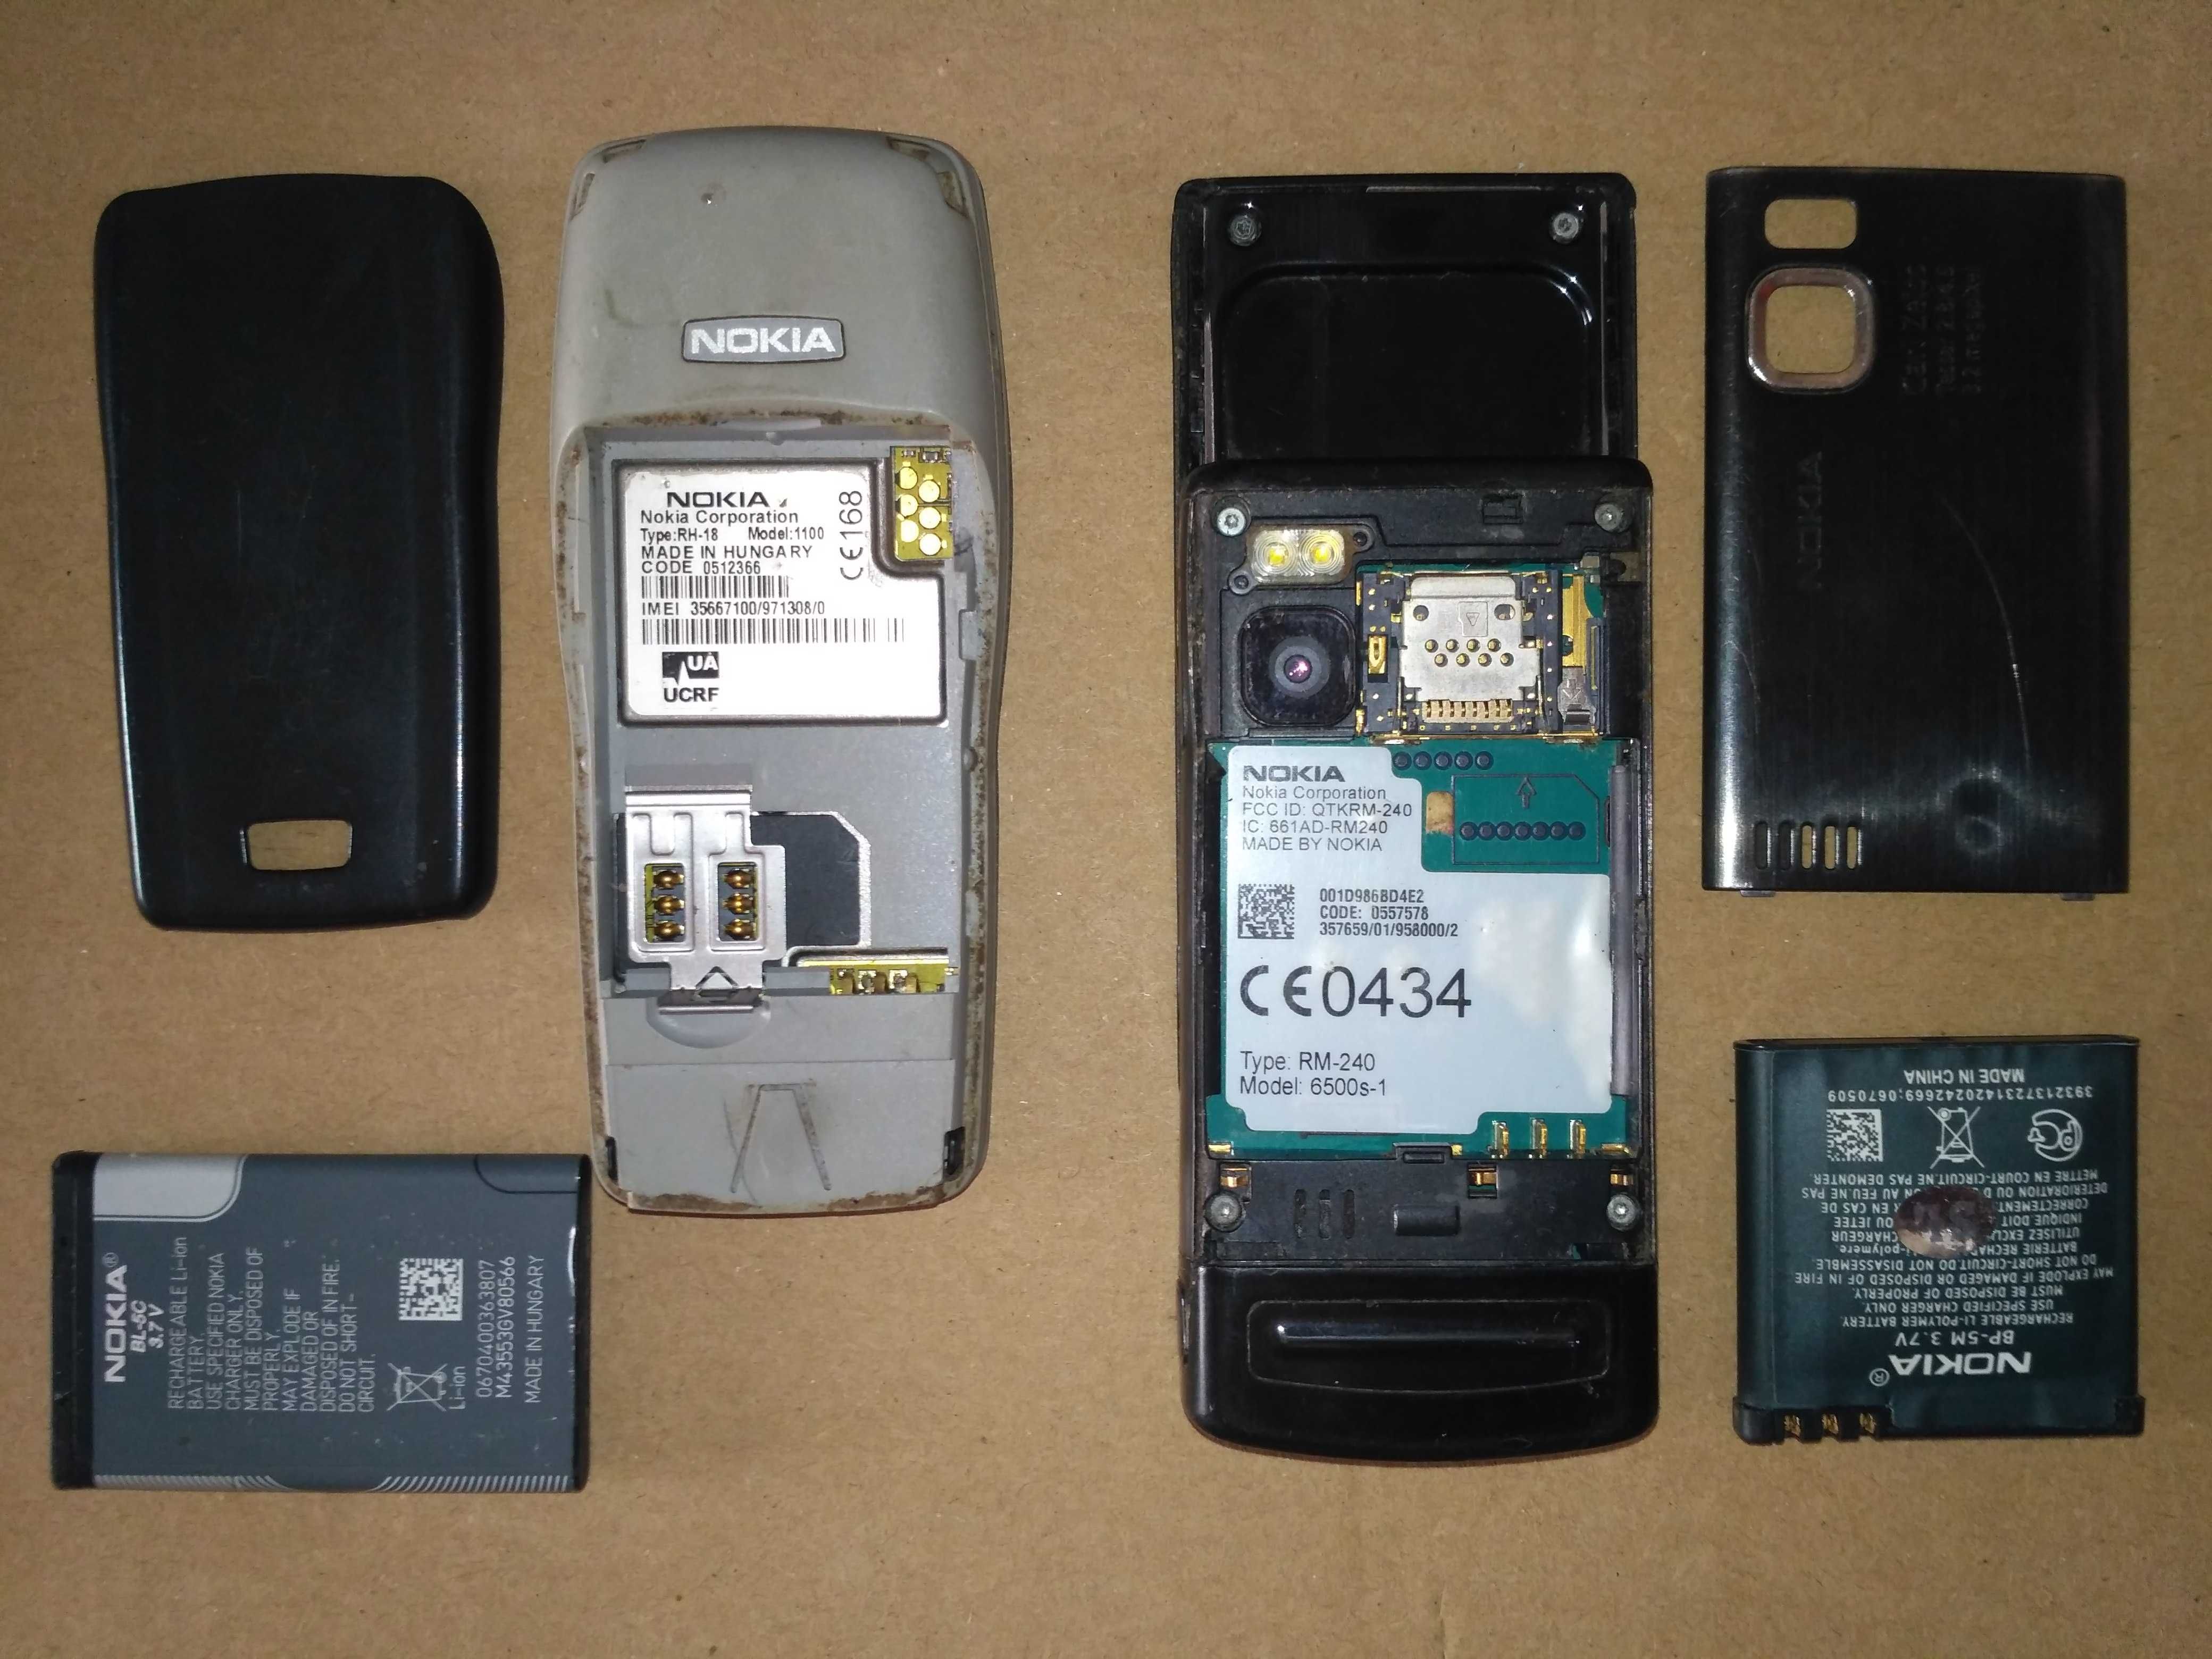 Nokia, Samsung, LG